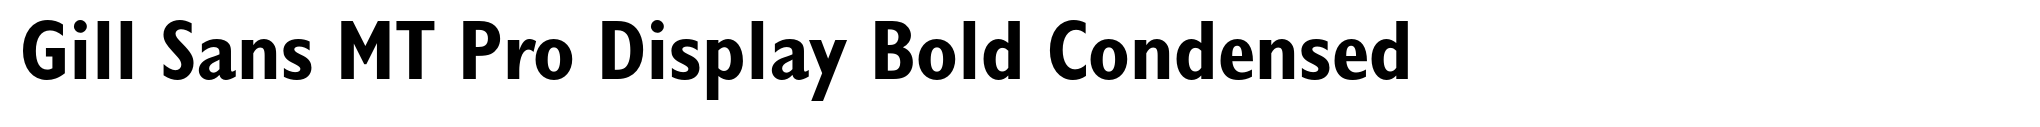 Gill Sans MT Pro Display Bold Condensed image